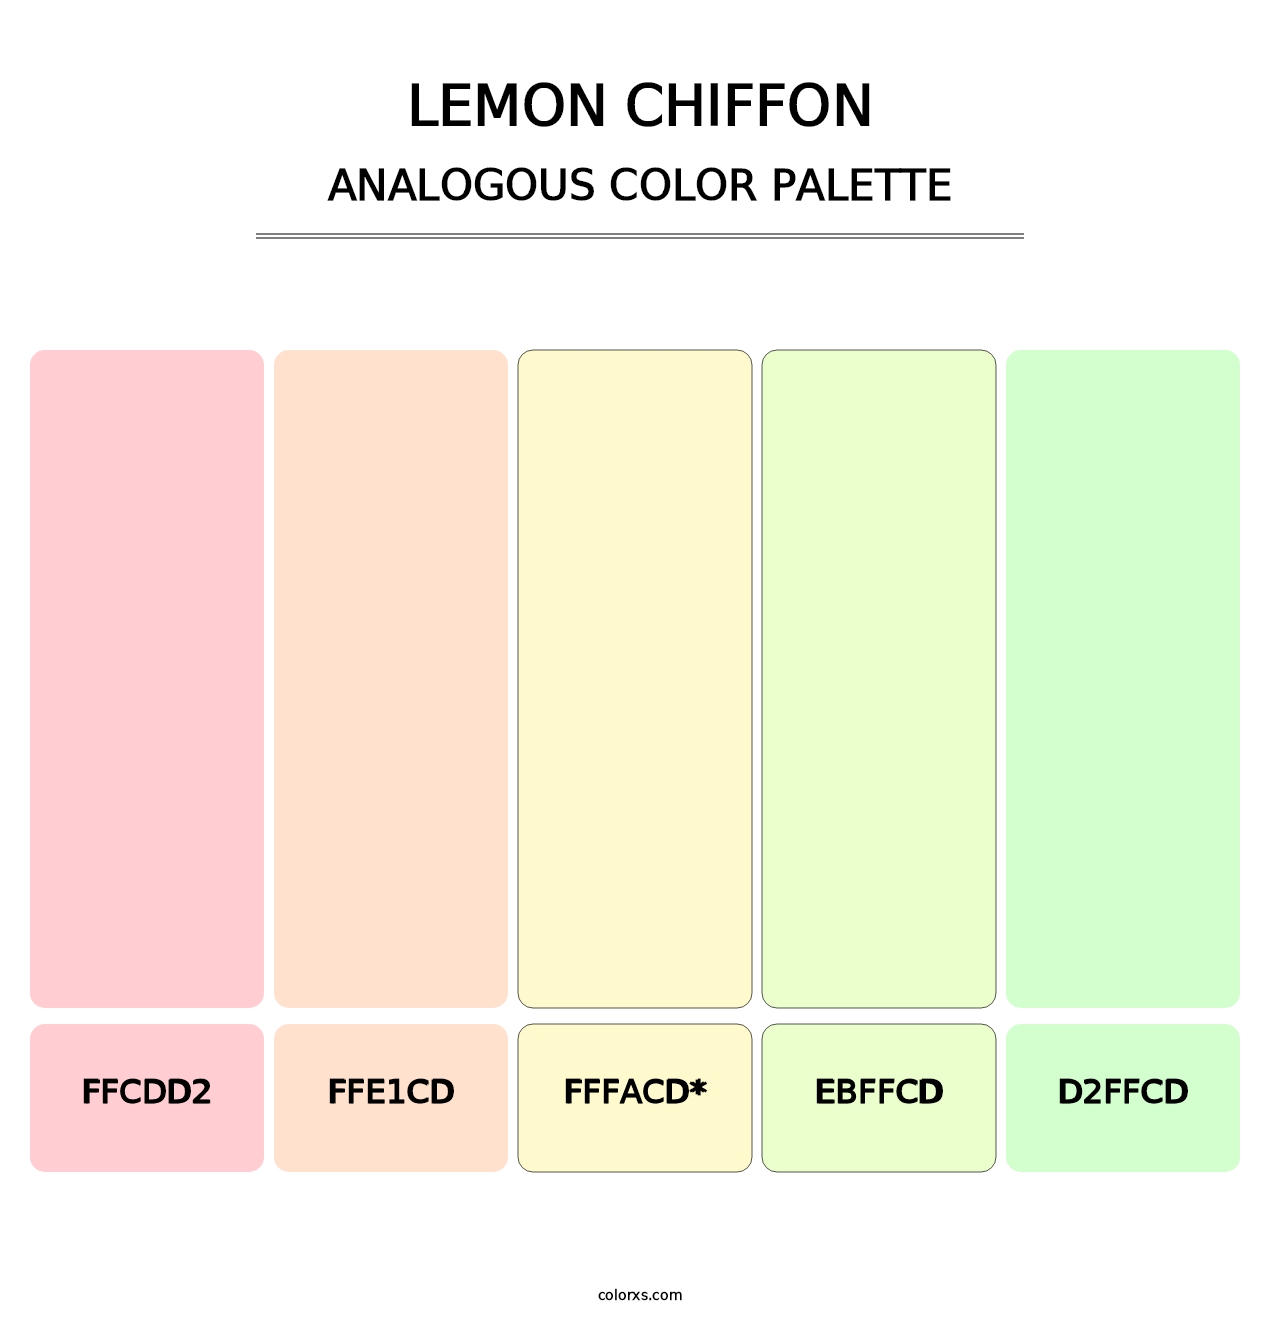 Lemon Chiffon - Analogous Color Palette